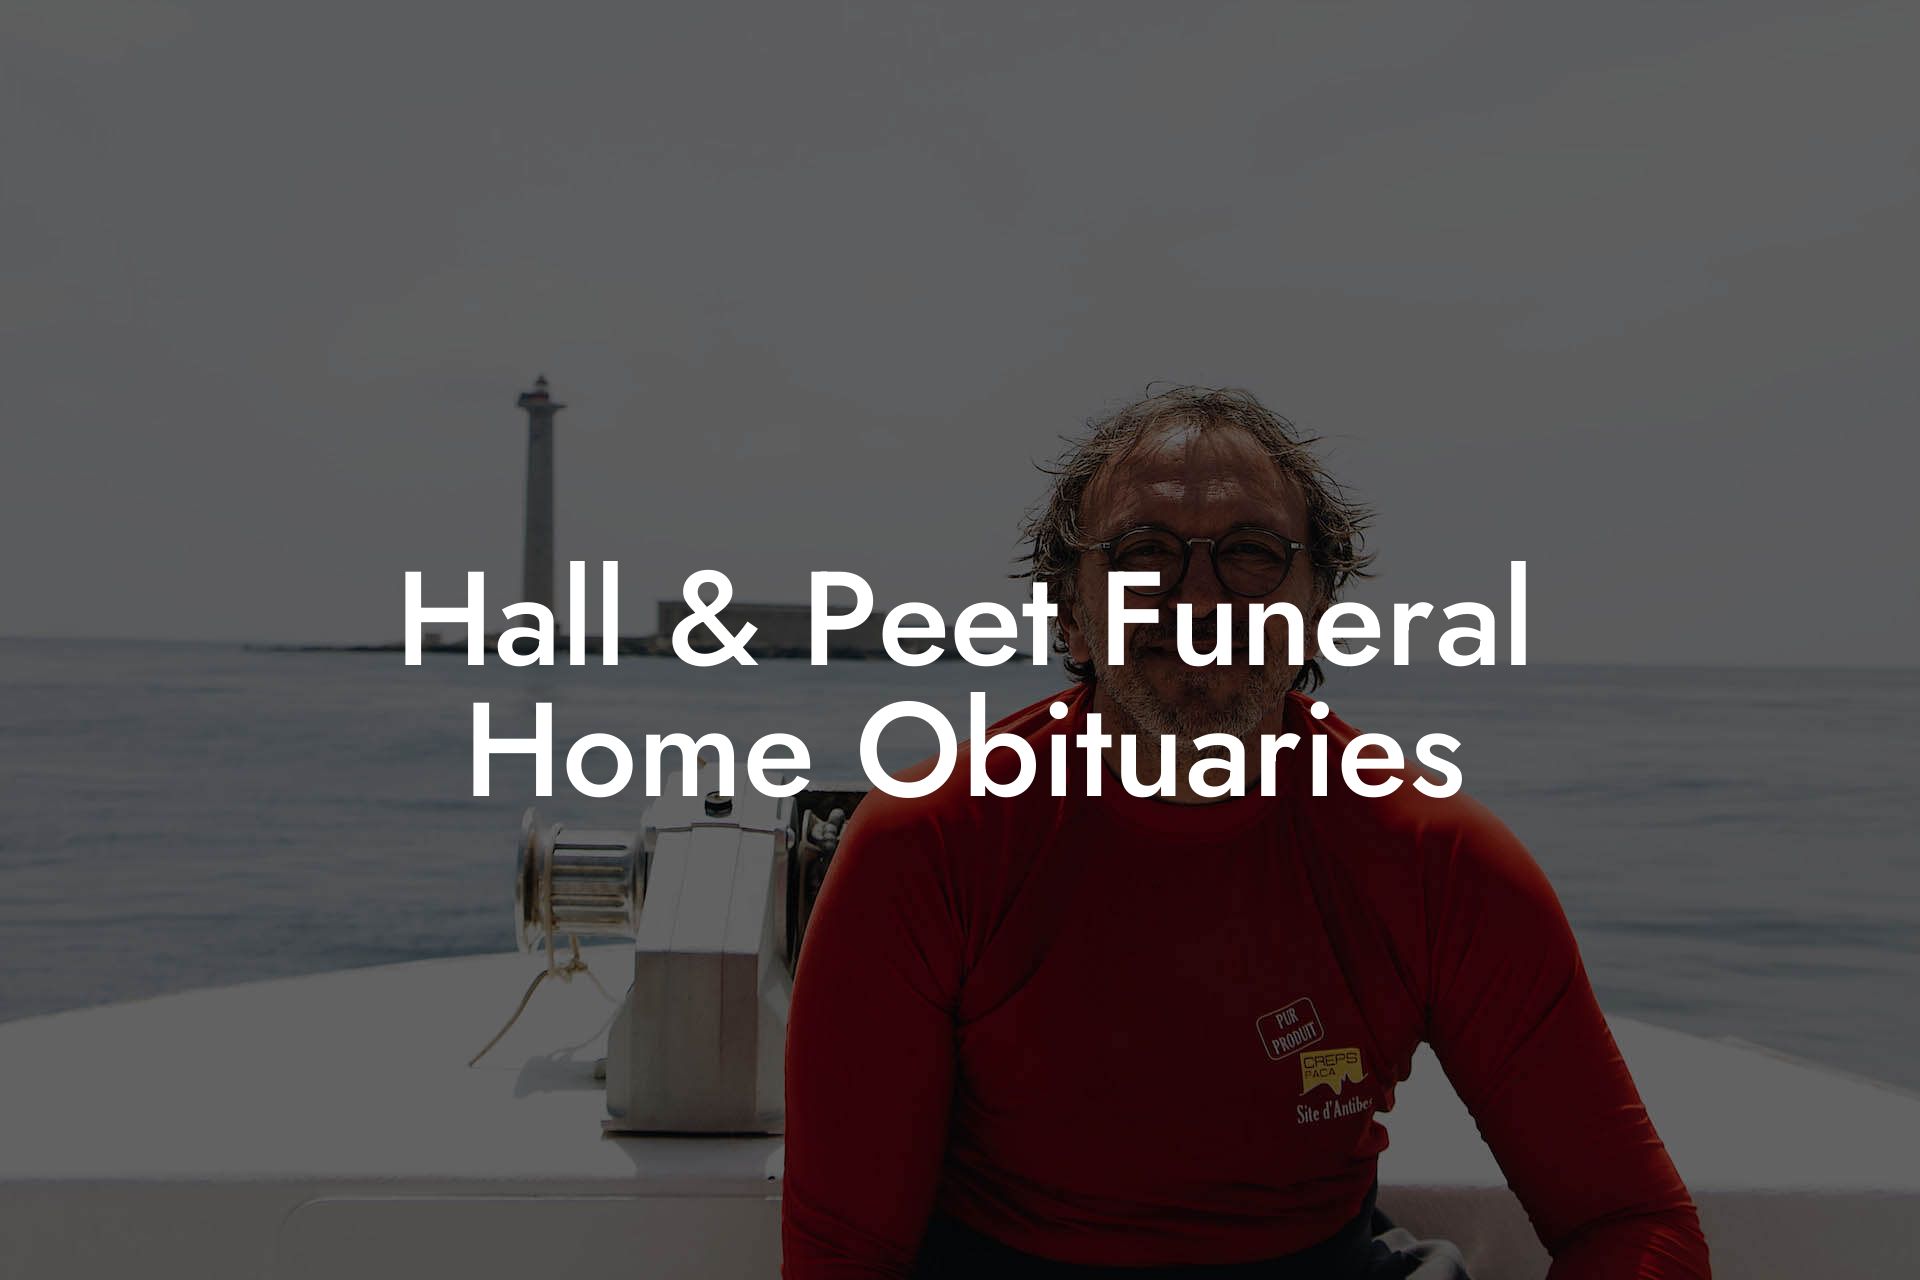 Hall & Peet Funeral Home Obituaries